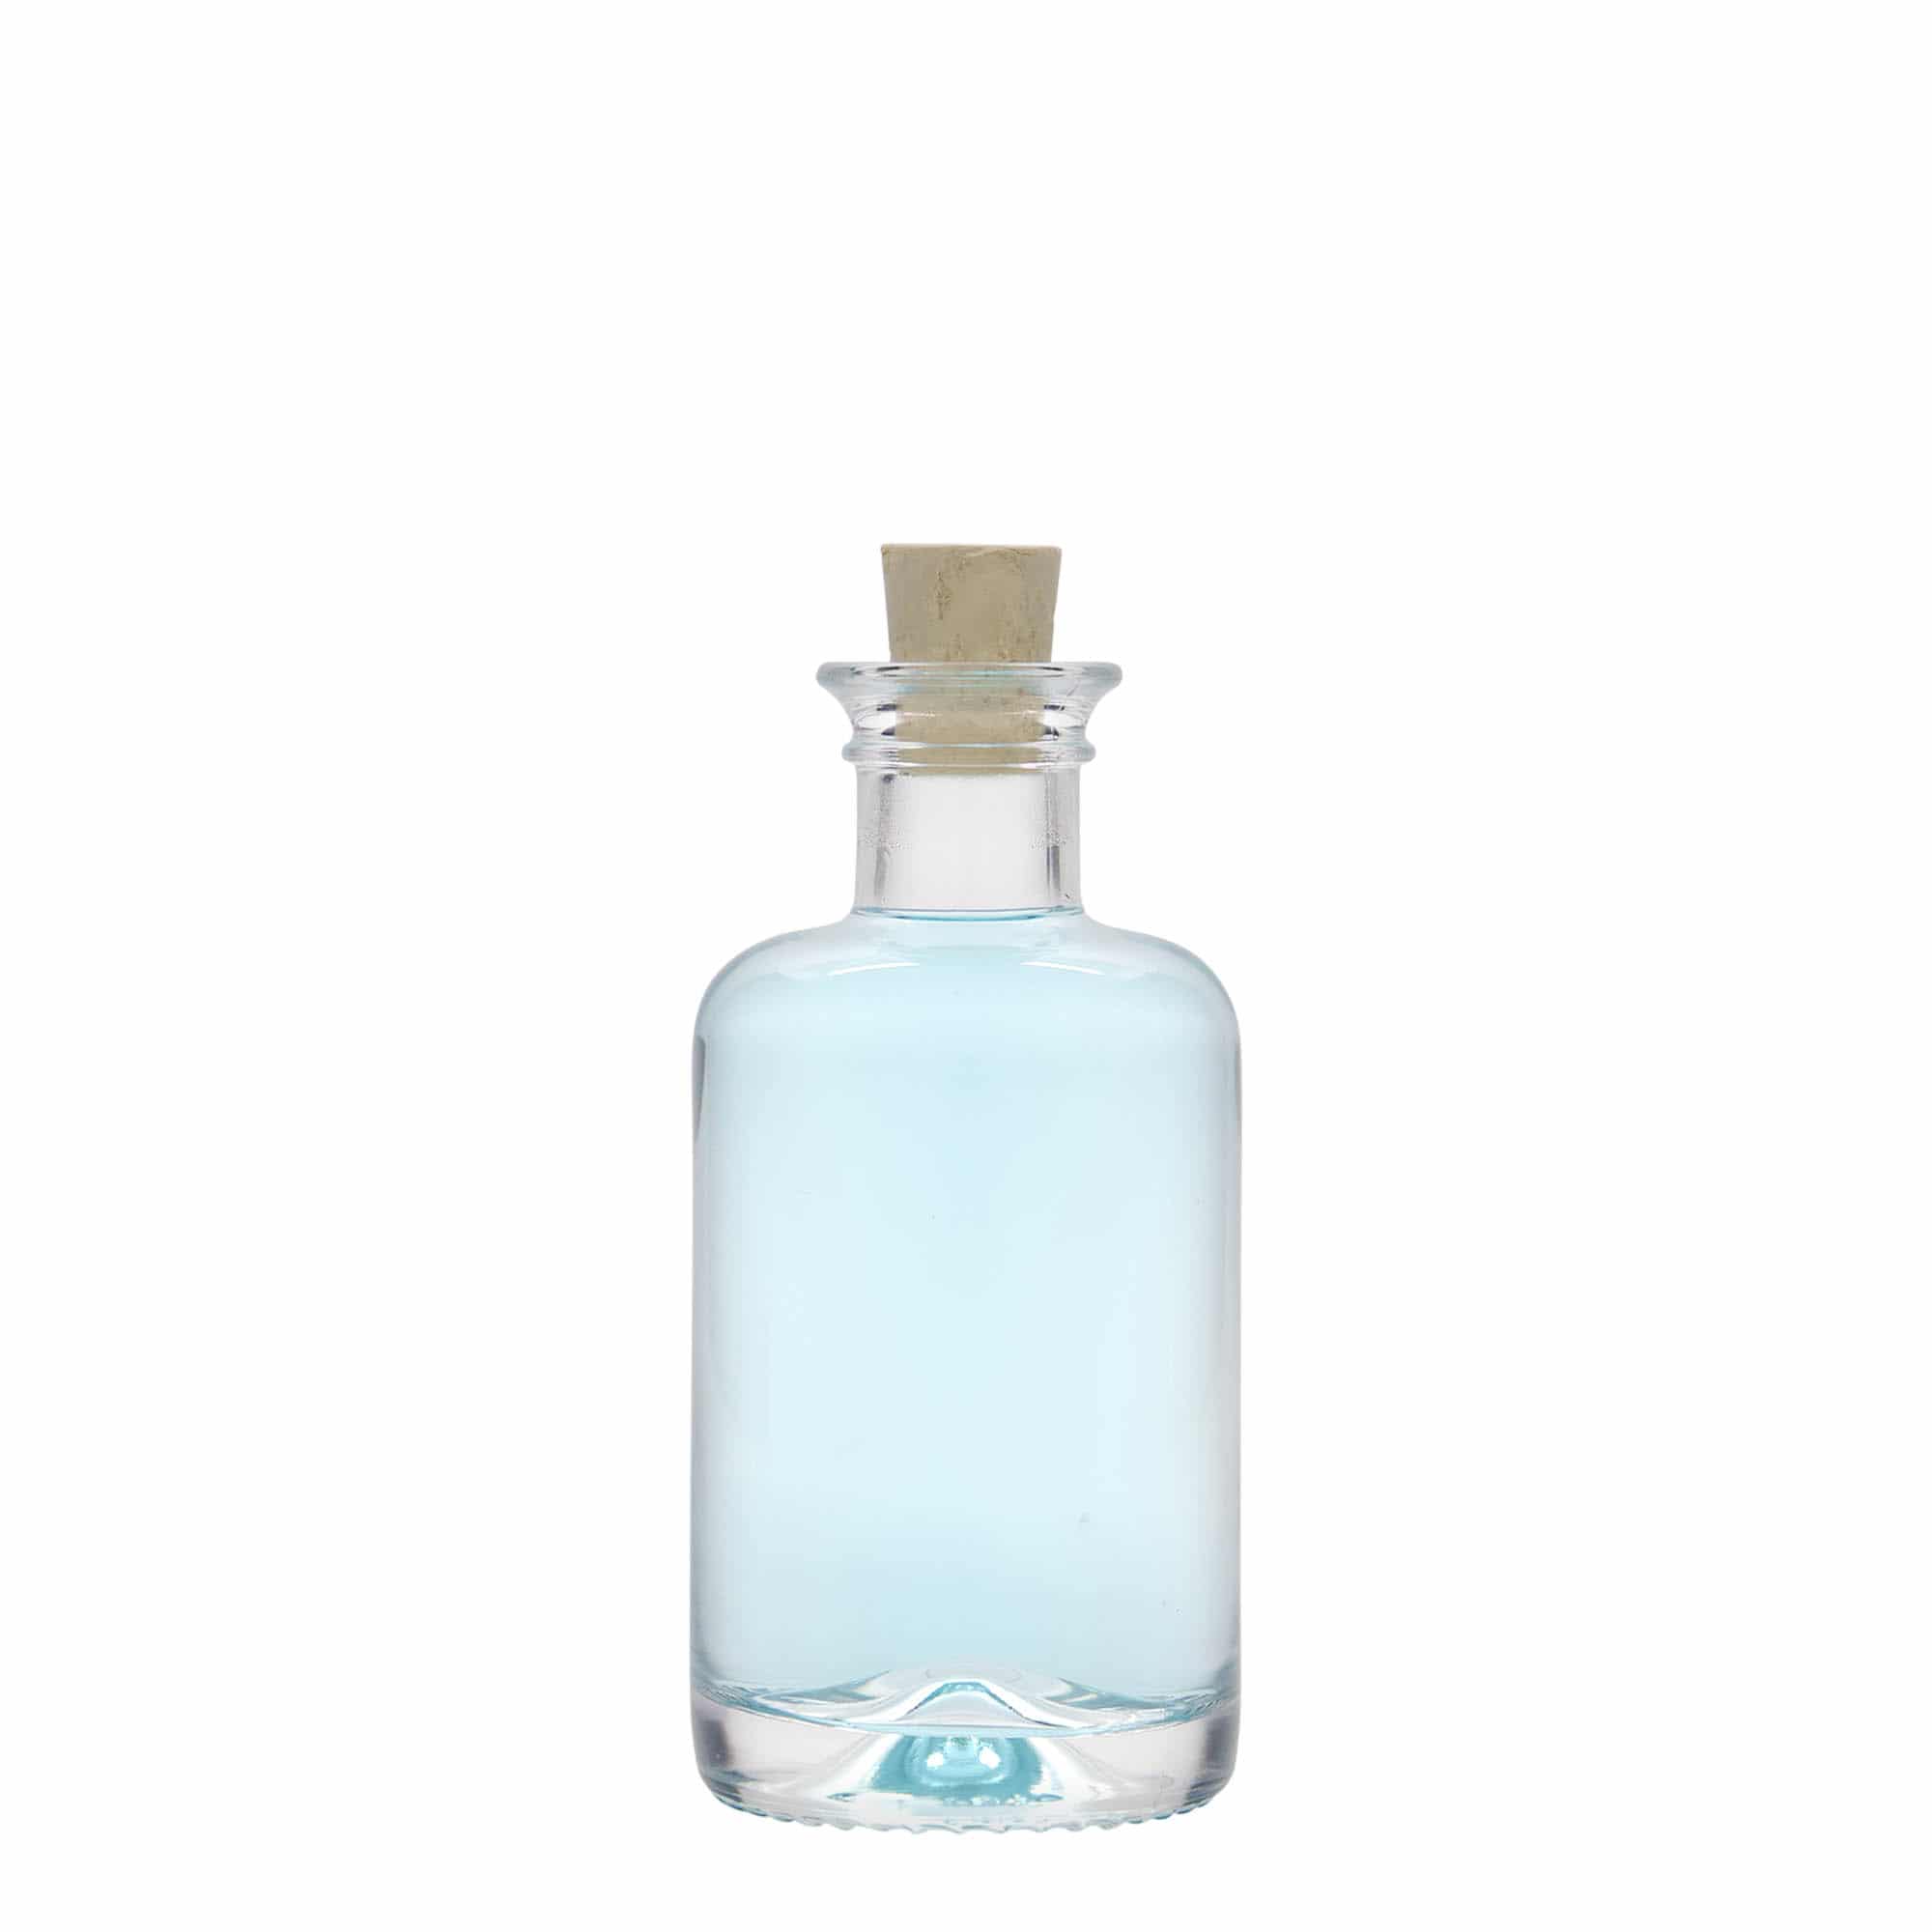 100 ml glass apothecary bottle, closure: cork